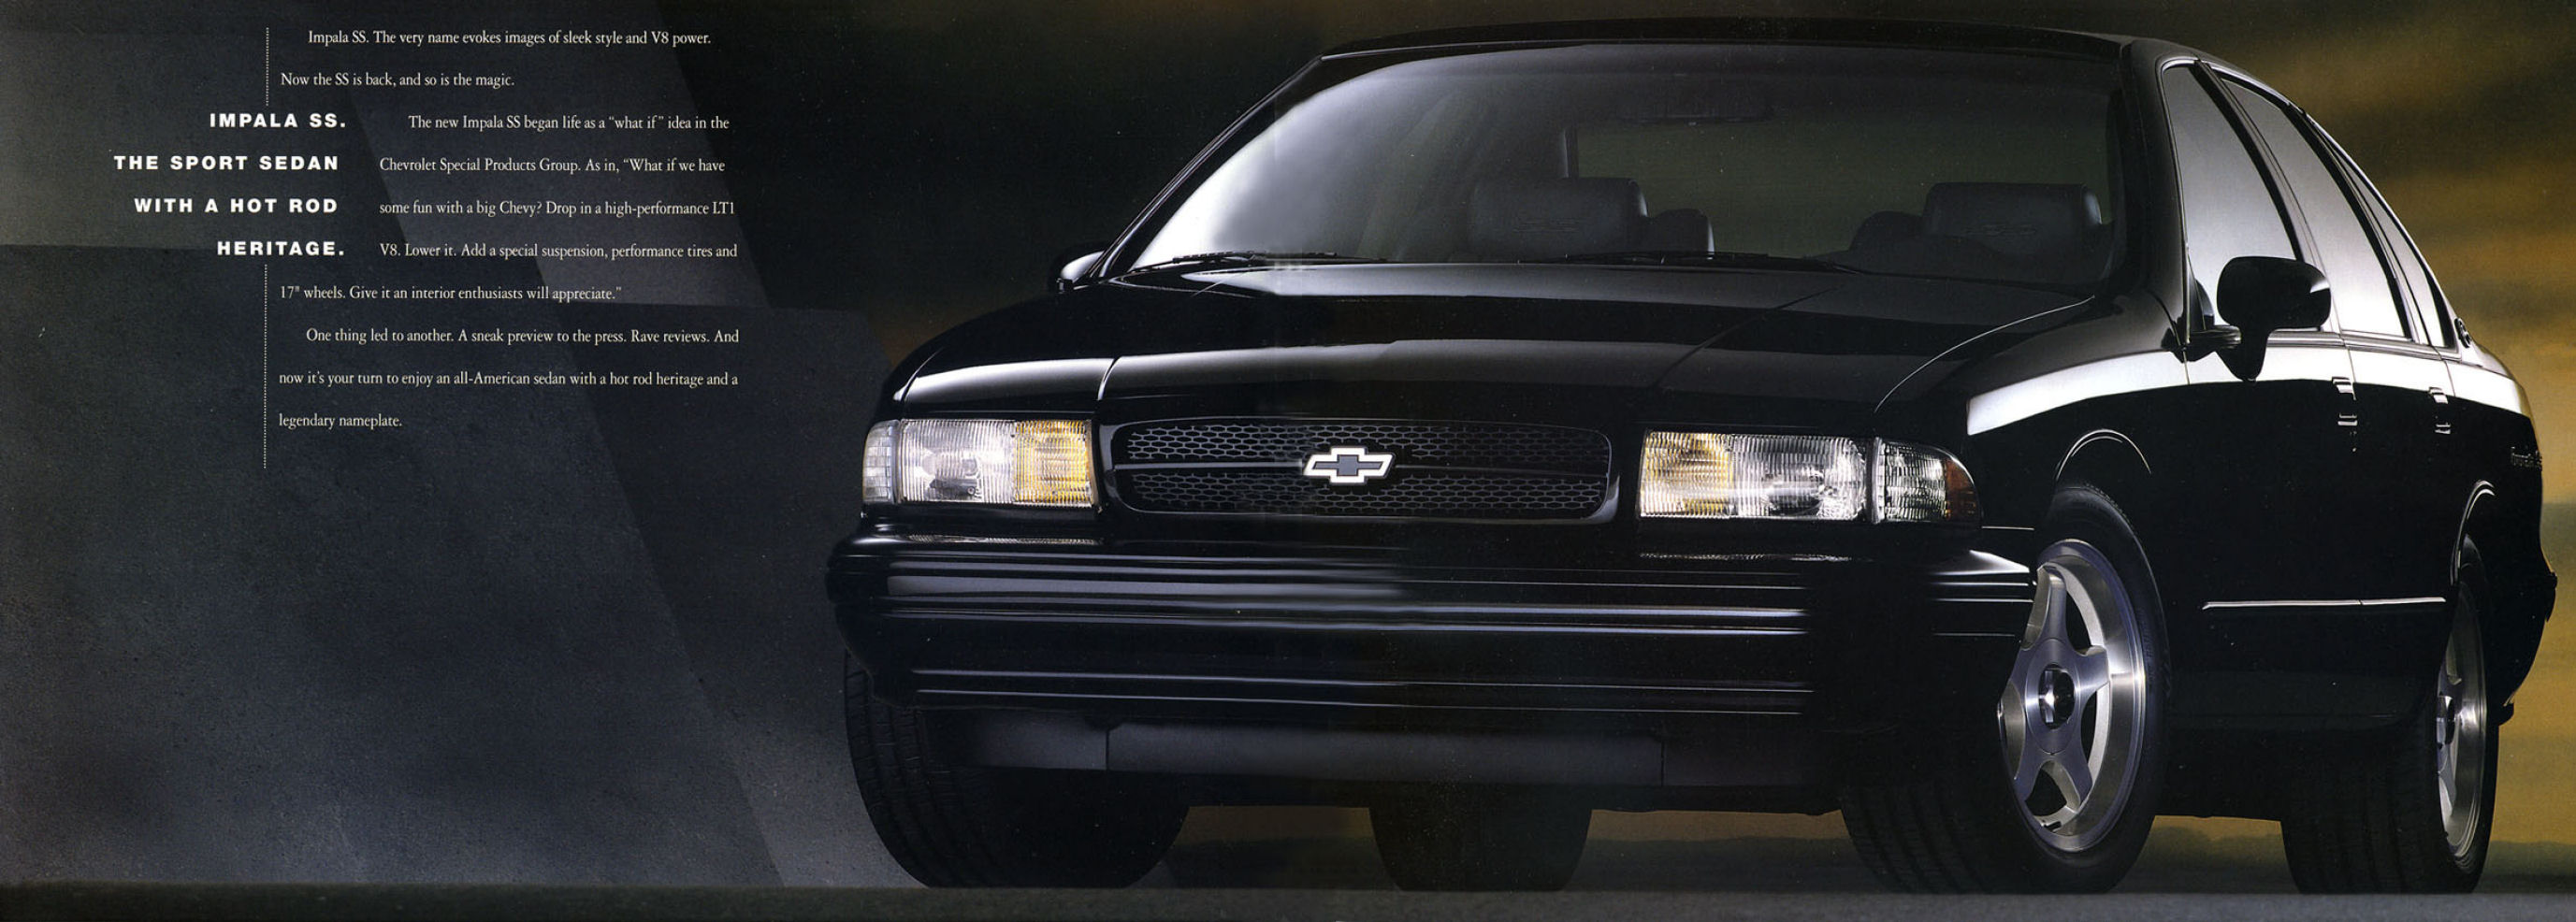 1994_Chevrolet_Impala_SS-02-03